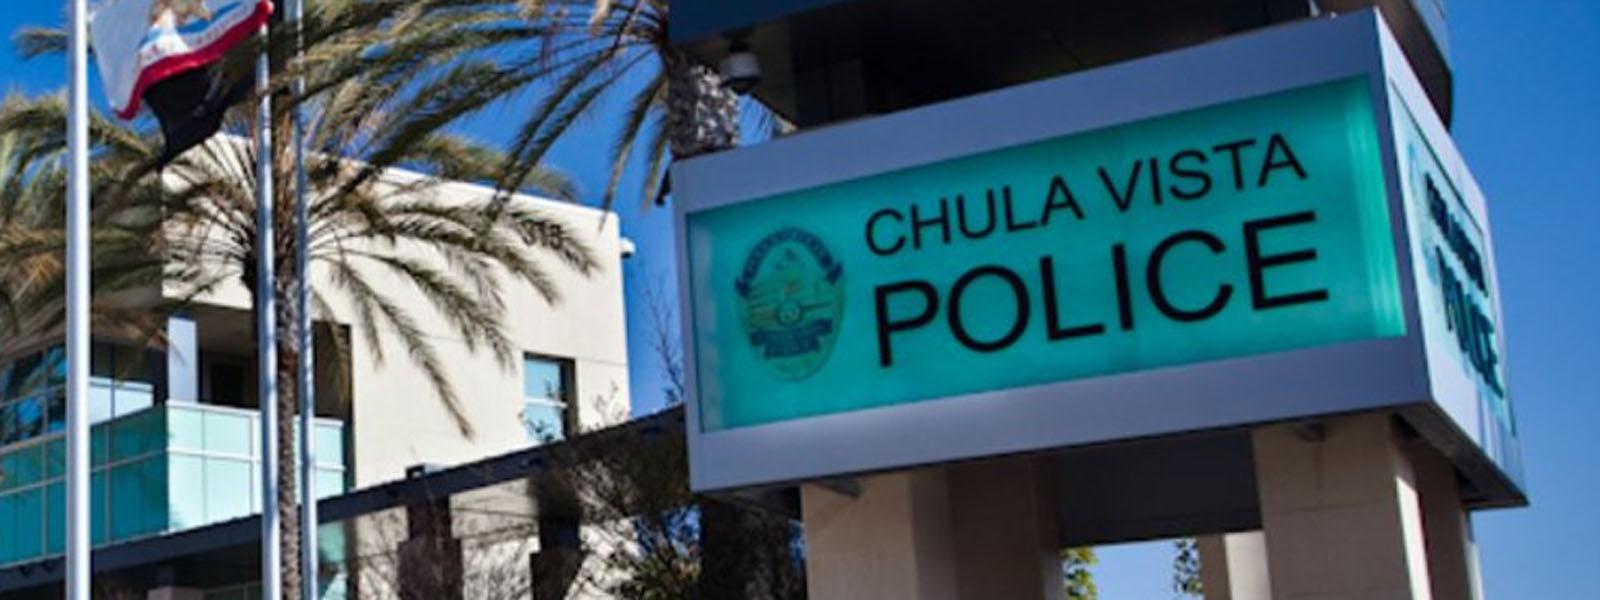 Chula Vista police station